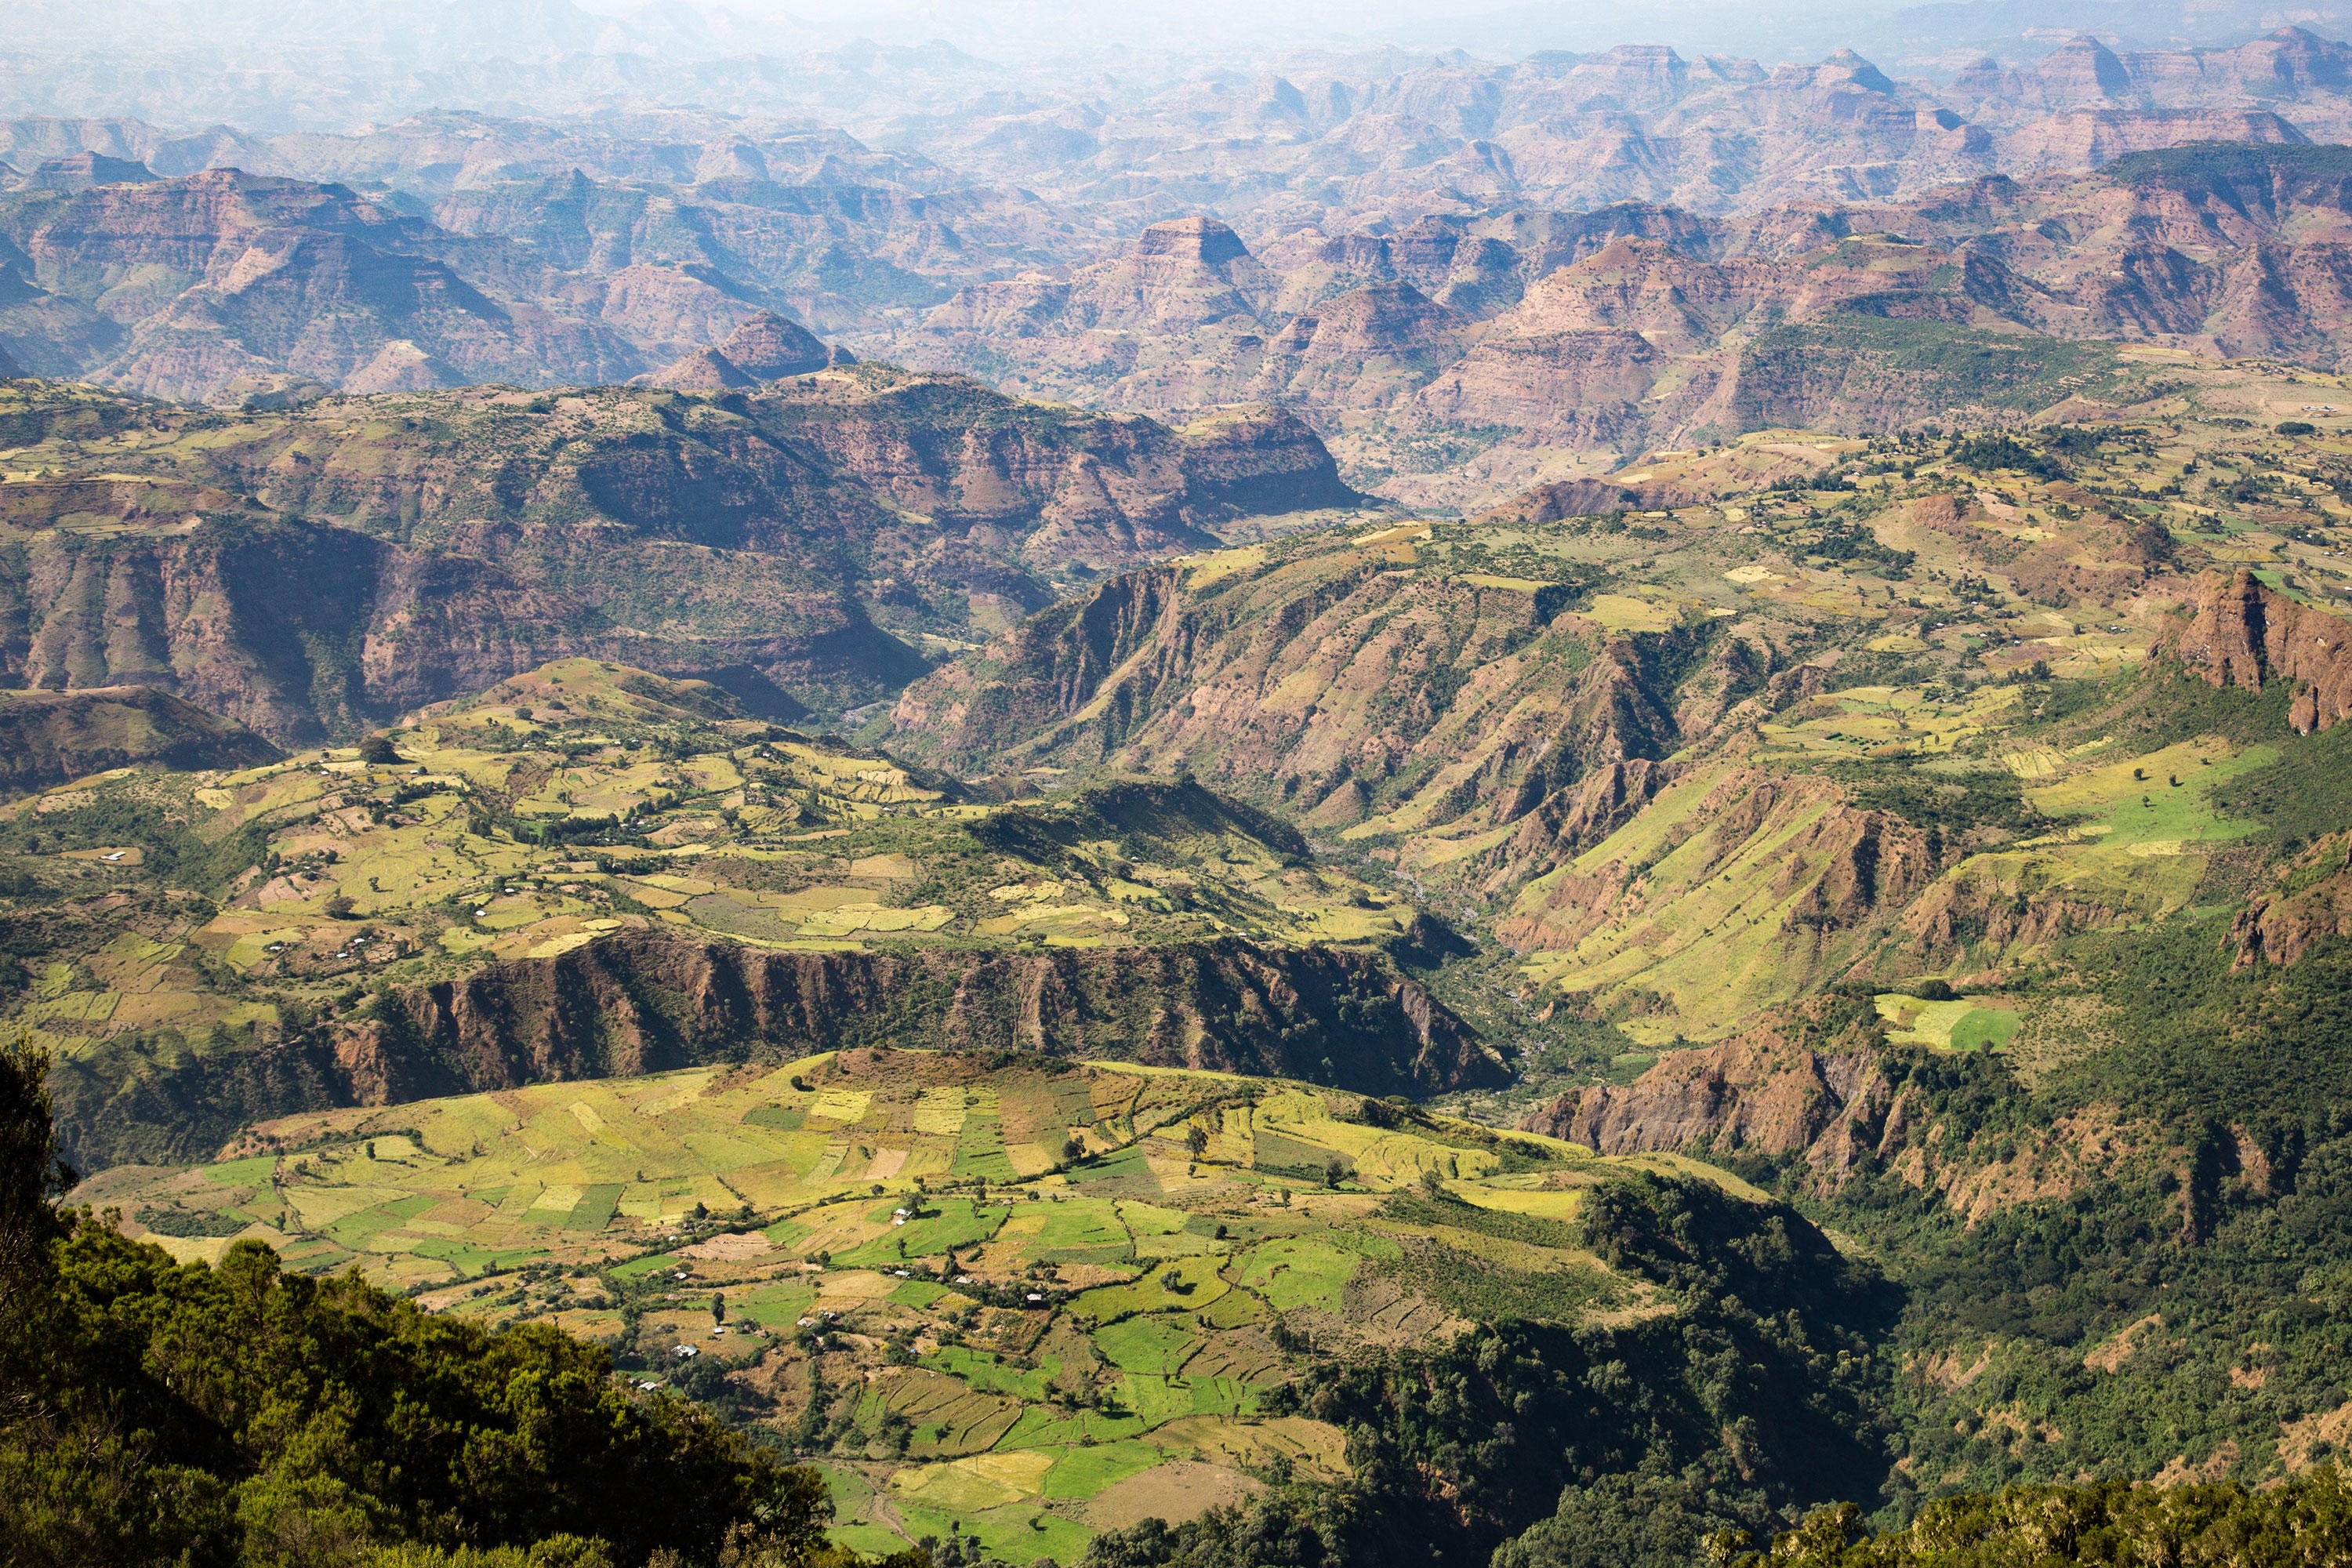 Mountain range and valleys in Ethiopia